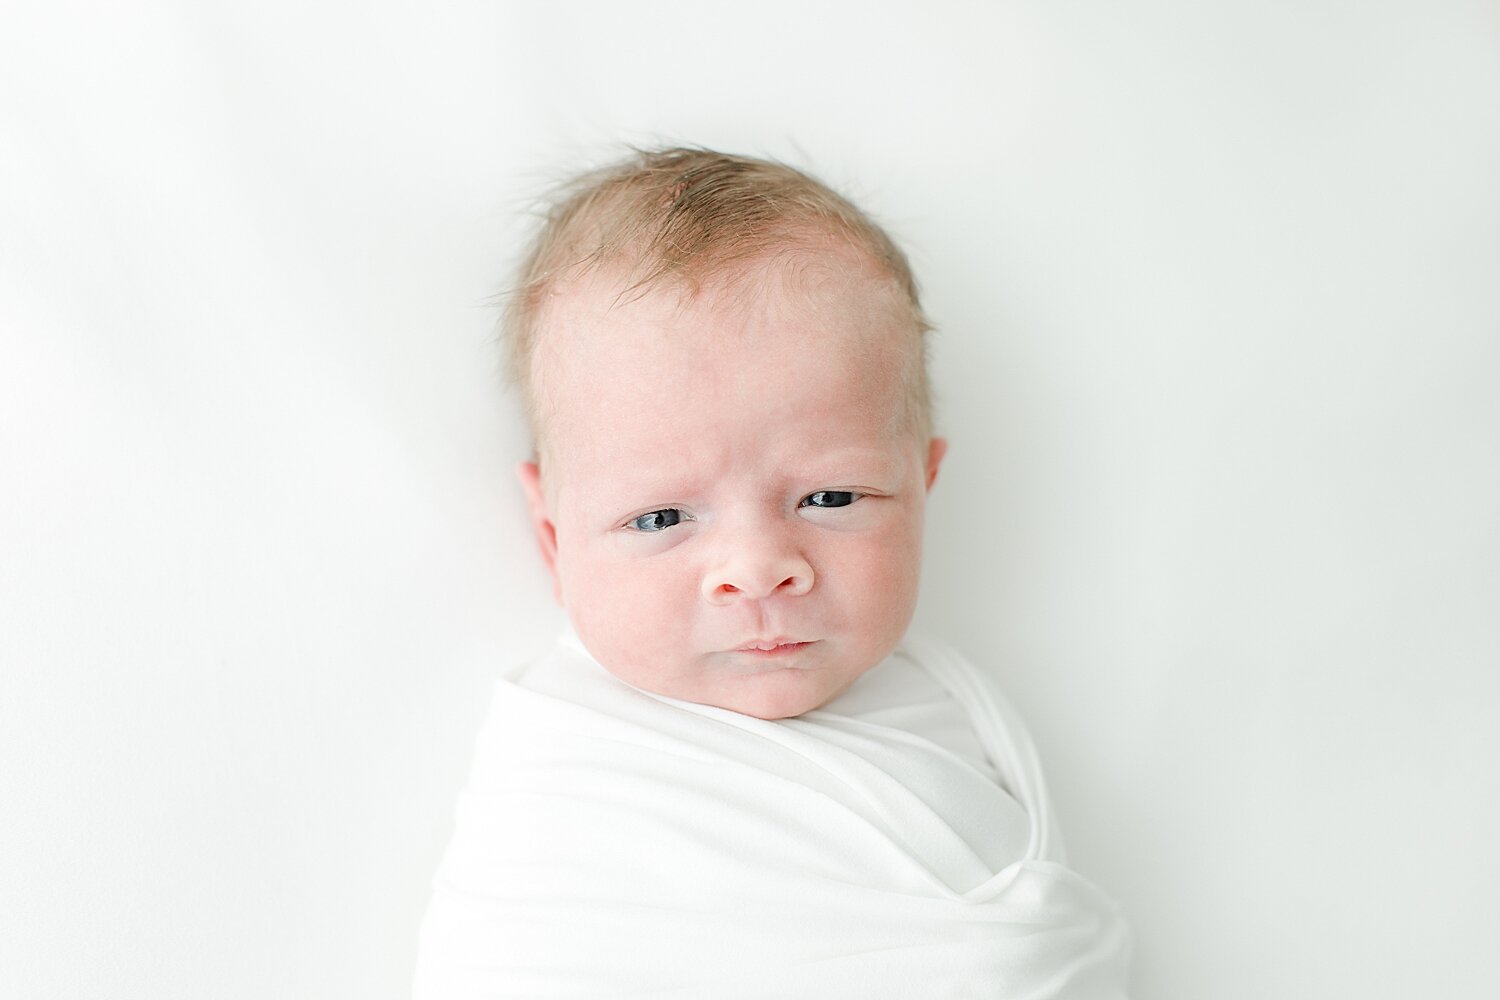 Newborn wide awake for photos | Kristin Wood Photography